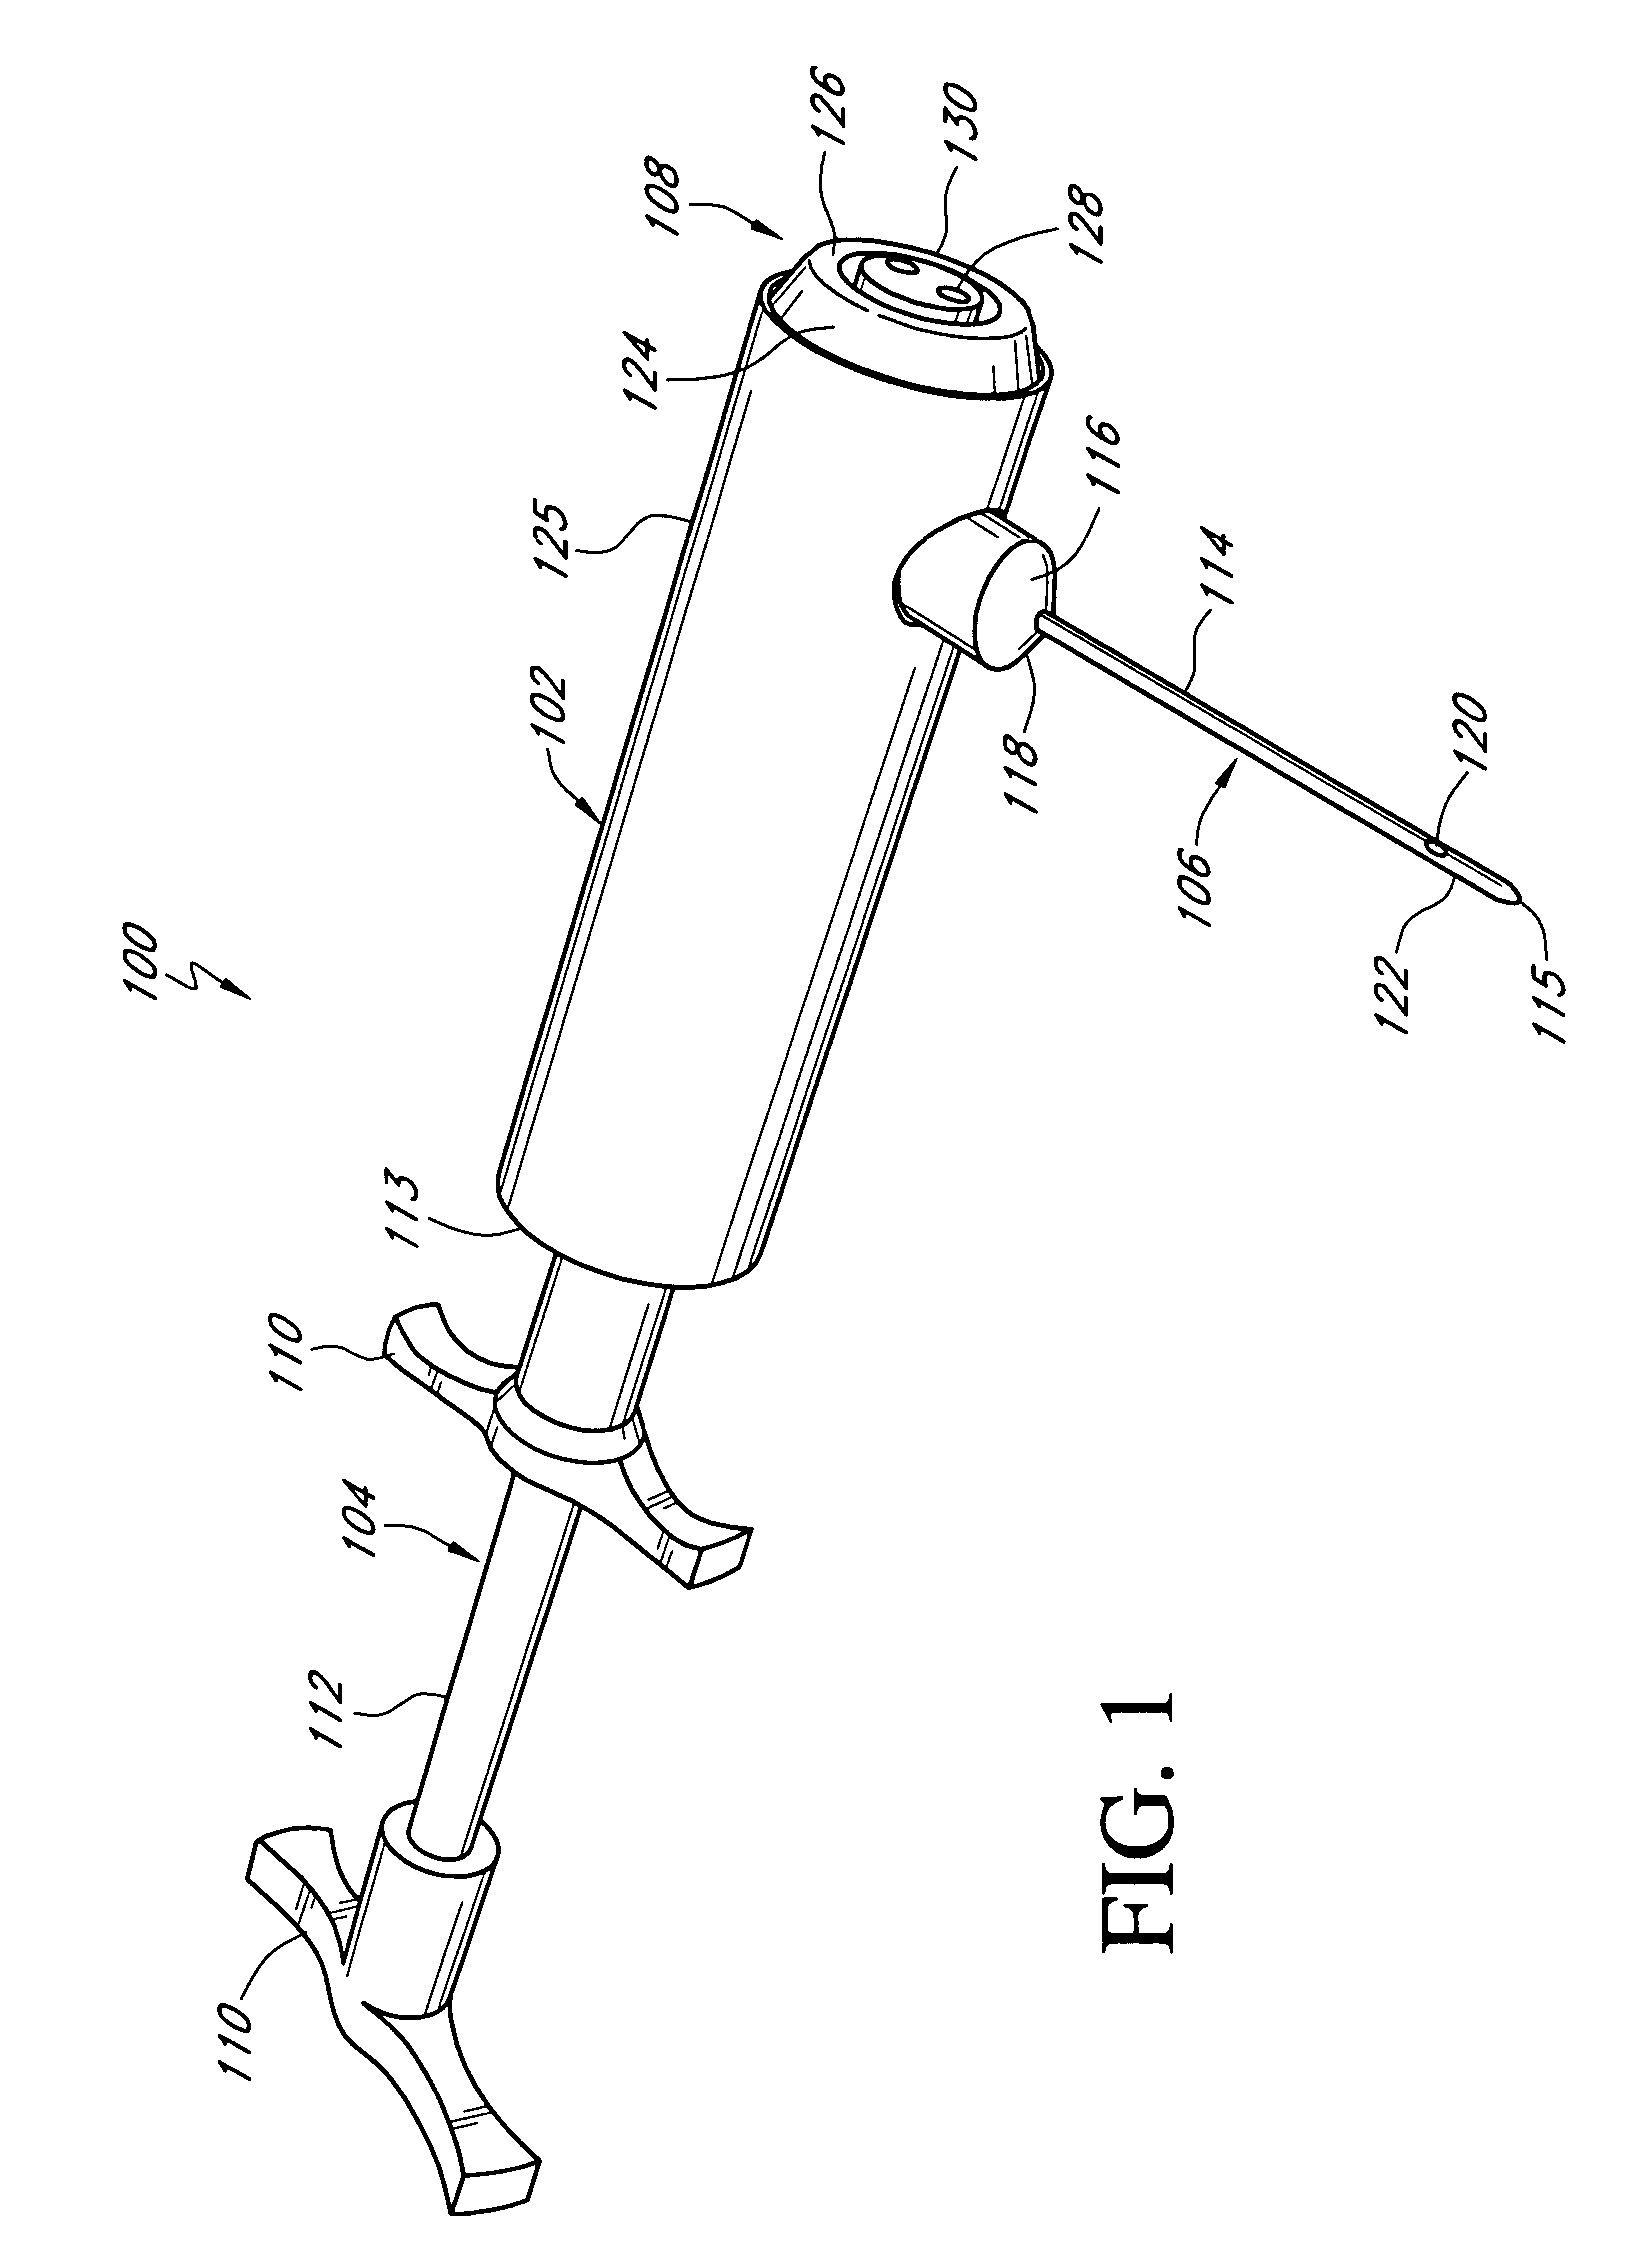 Combination cork extractor and vacuum sealer tool